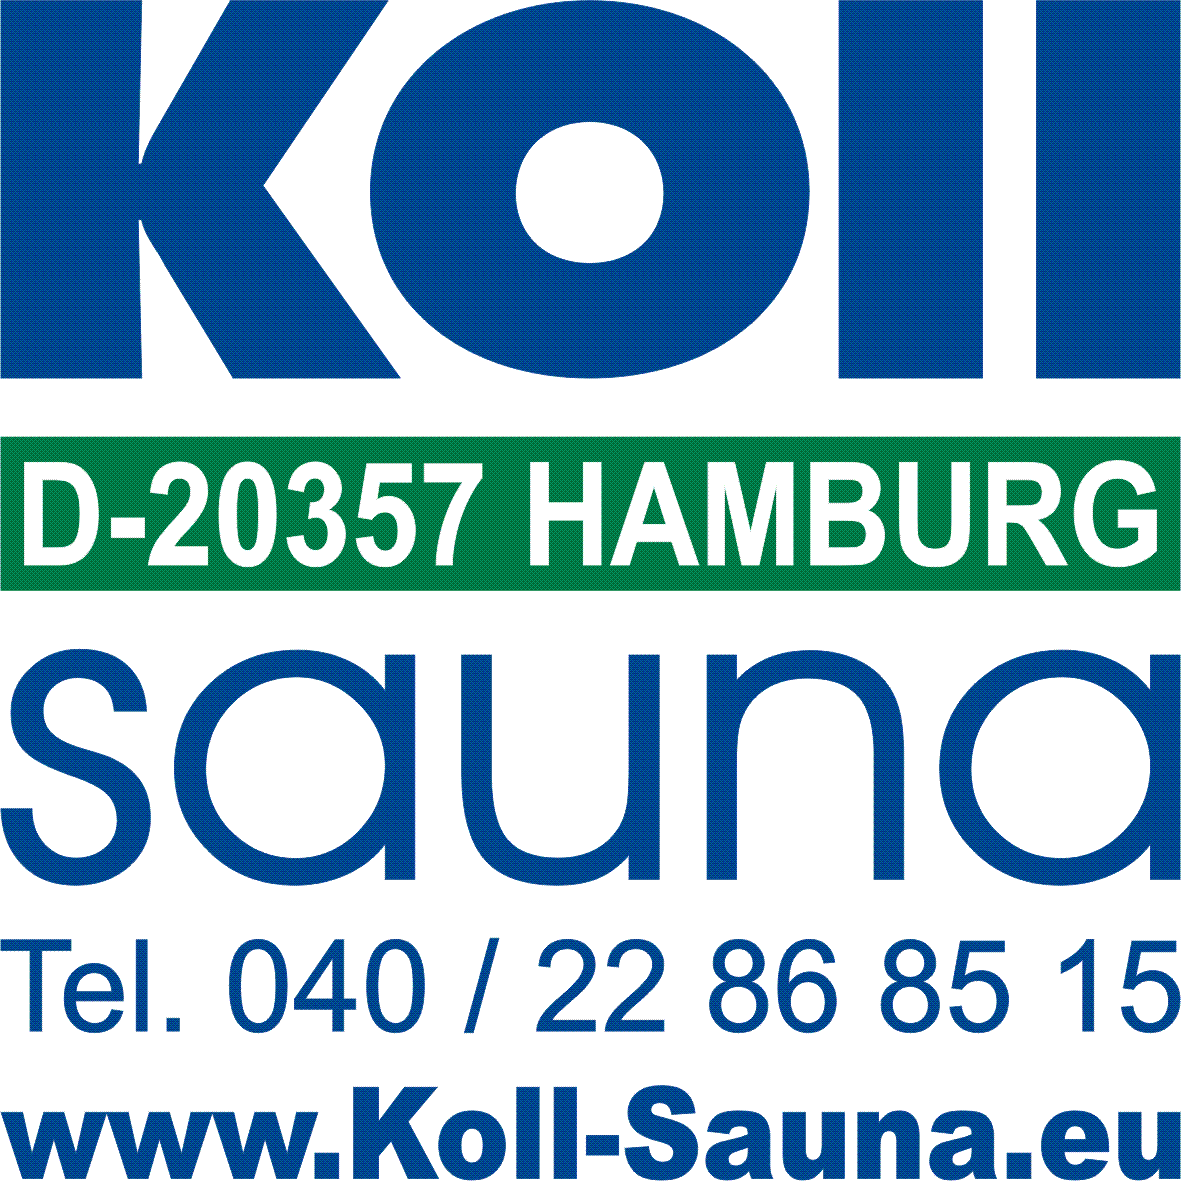 Koll Sauna Delbrck ++ Berlin ++ Mnchen ++ Koll Saunabau